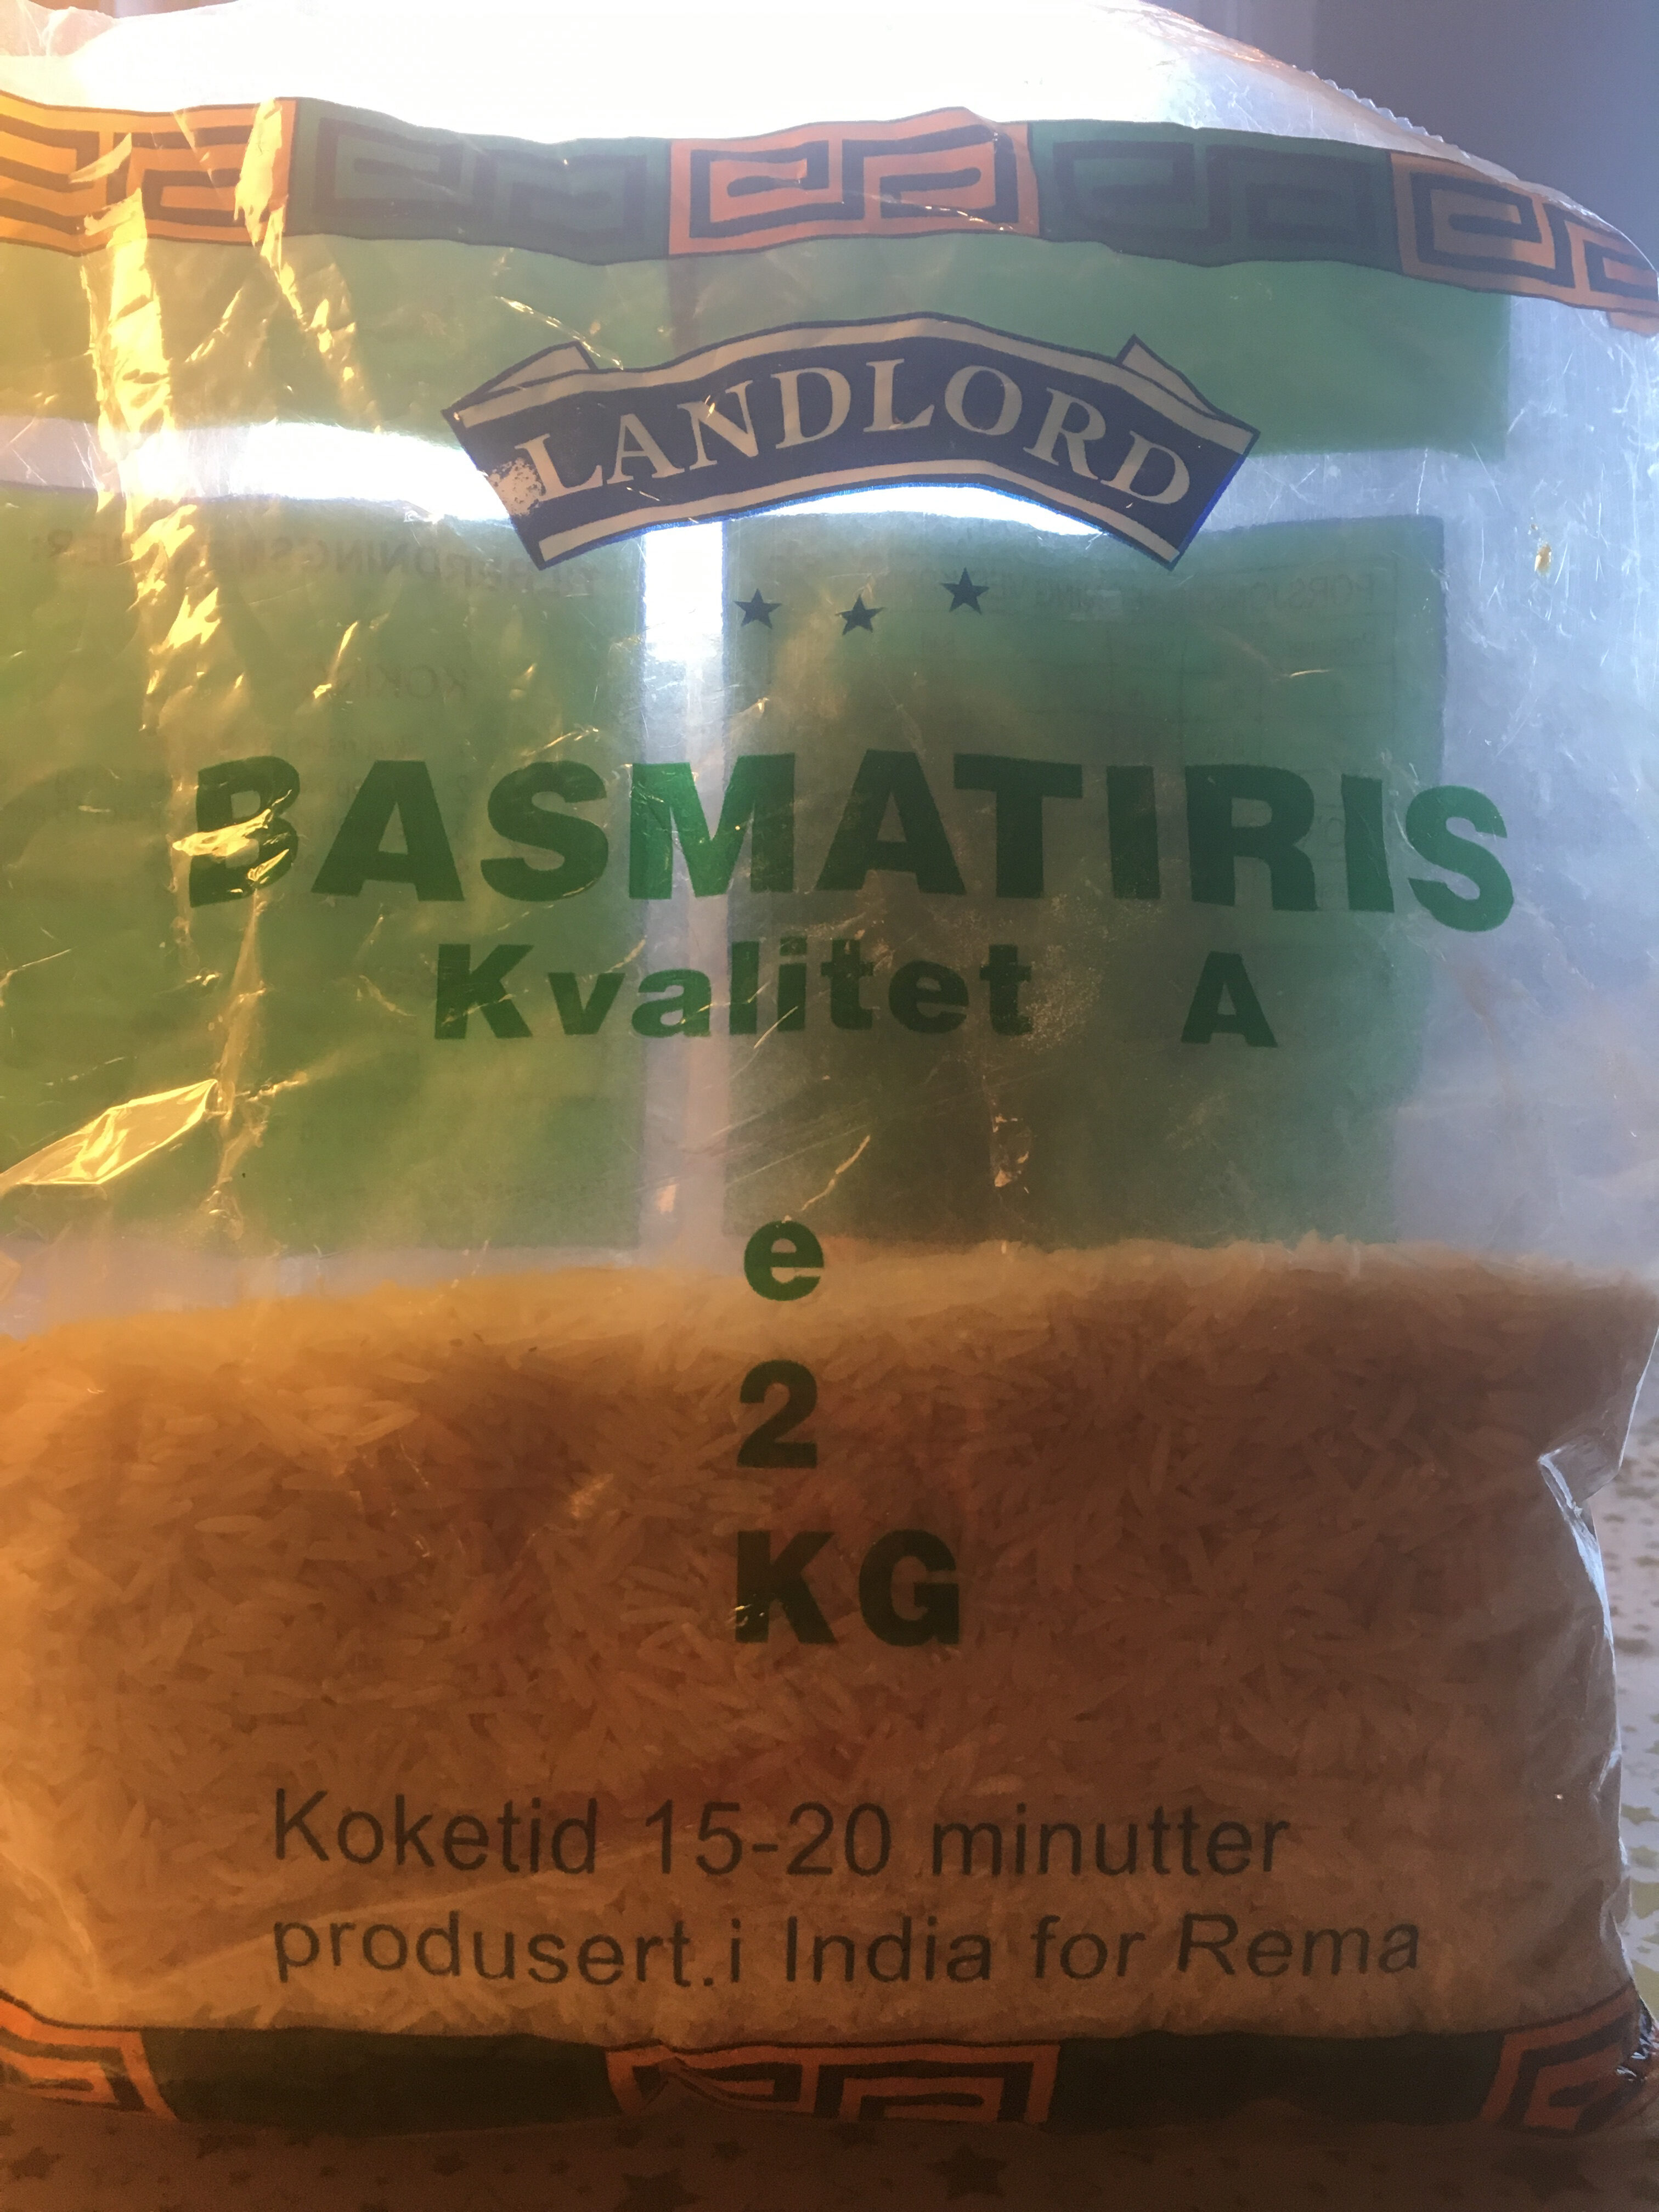 Basmatiris - Produkt